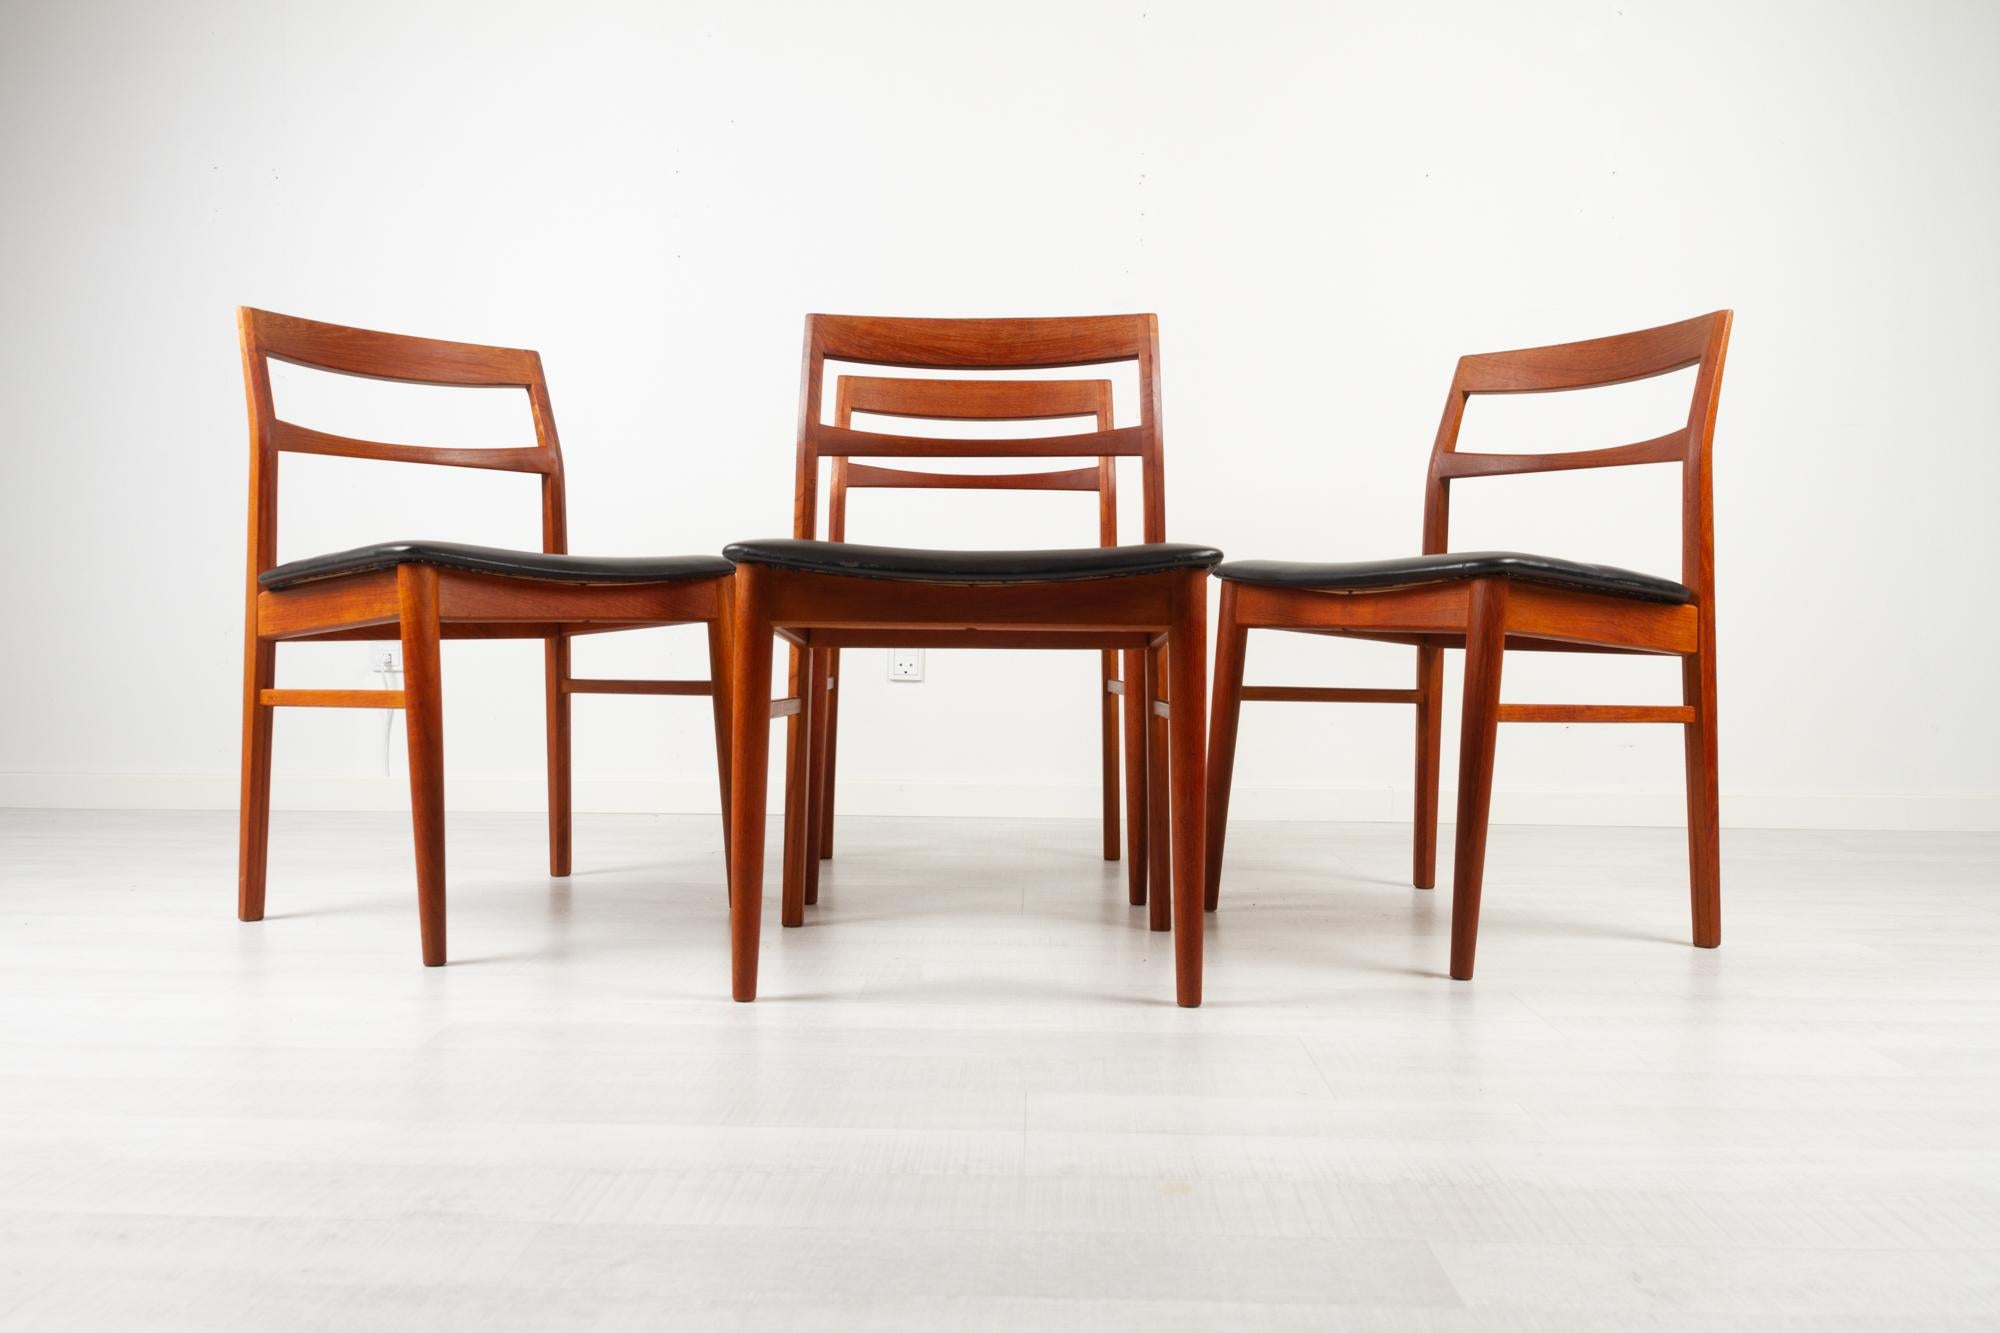 Vintage Danish Teak Dining Chairs by Kjærnulf for Vejle Møbelfabrik, 1960s For Sale 1